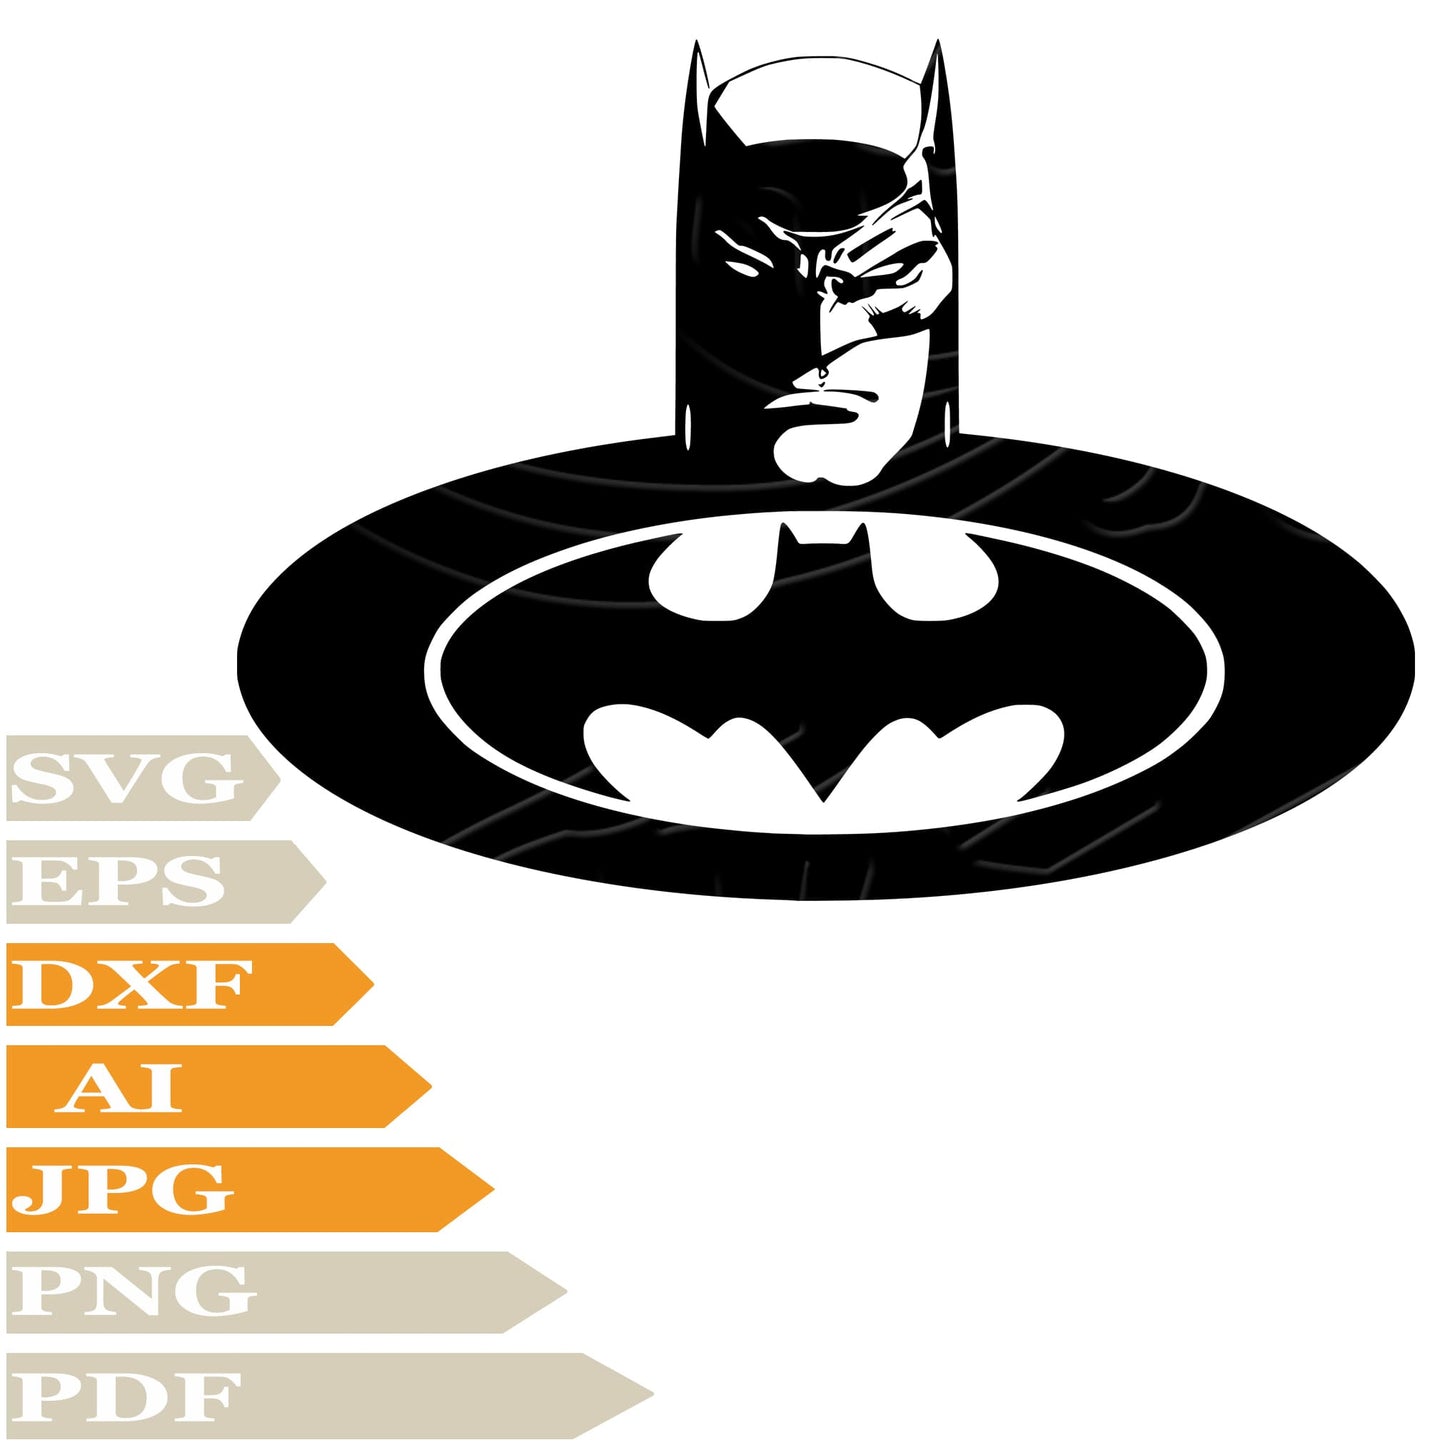 Bat SVG, Batman SVG Design, Batman Logo Vector Graphics, Batman For Cricut, For Tattoo, Clip Art, Cut File, T-Shirts, Silhouette, All Available